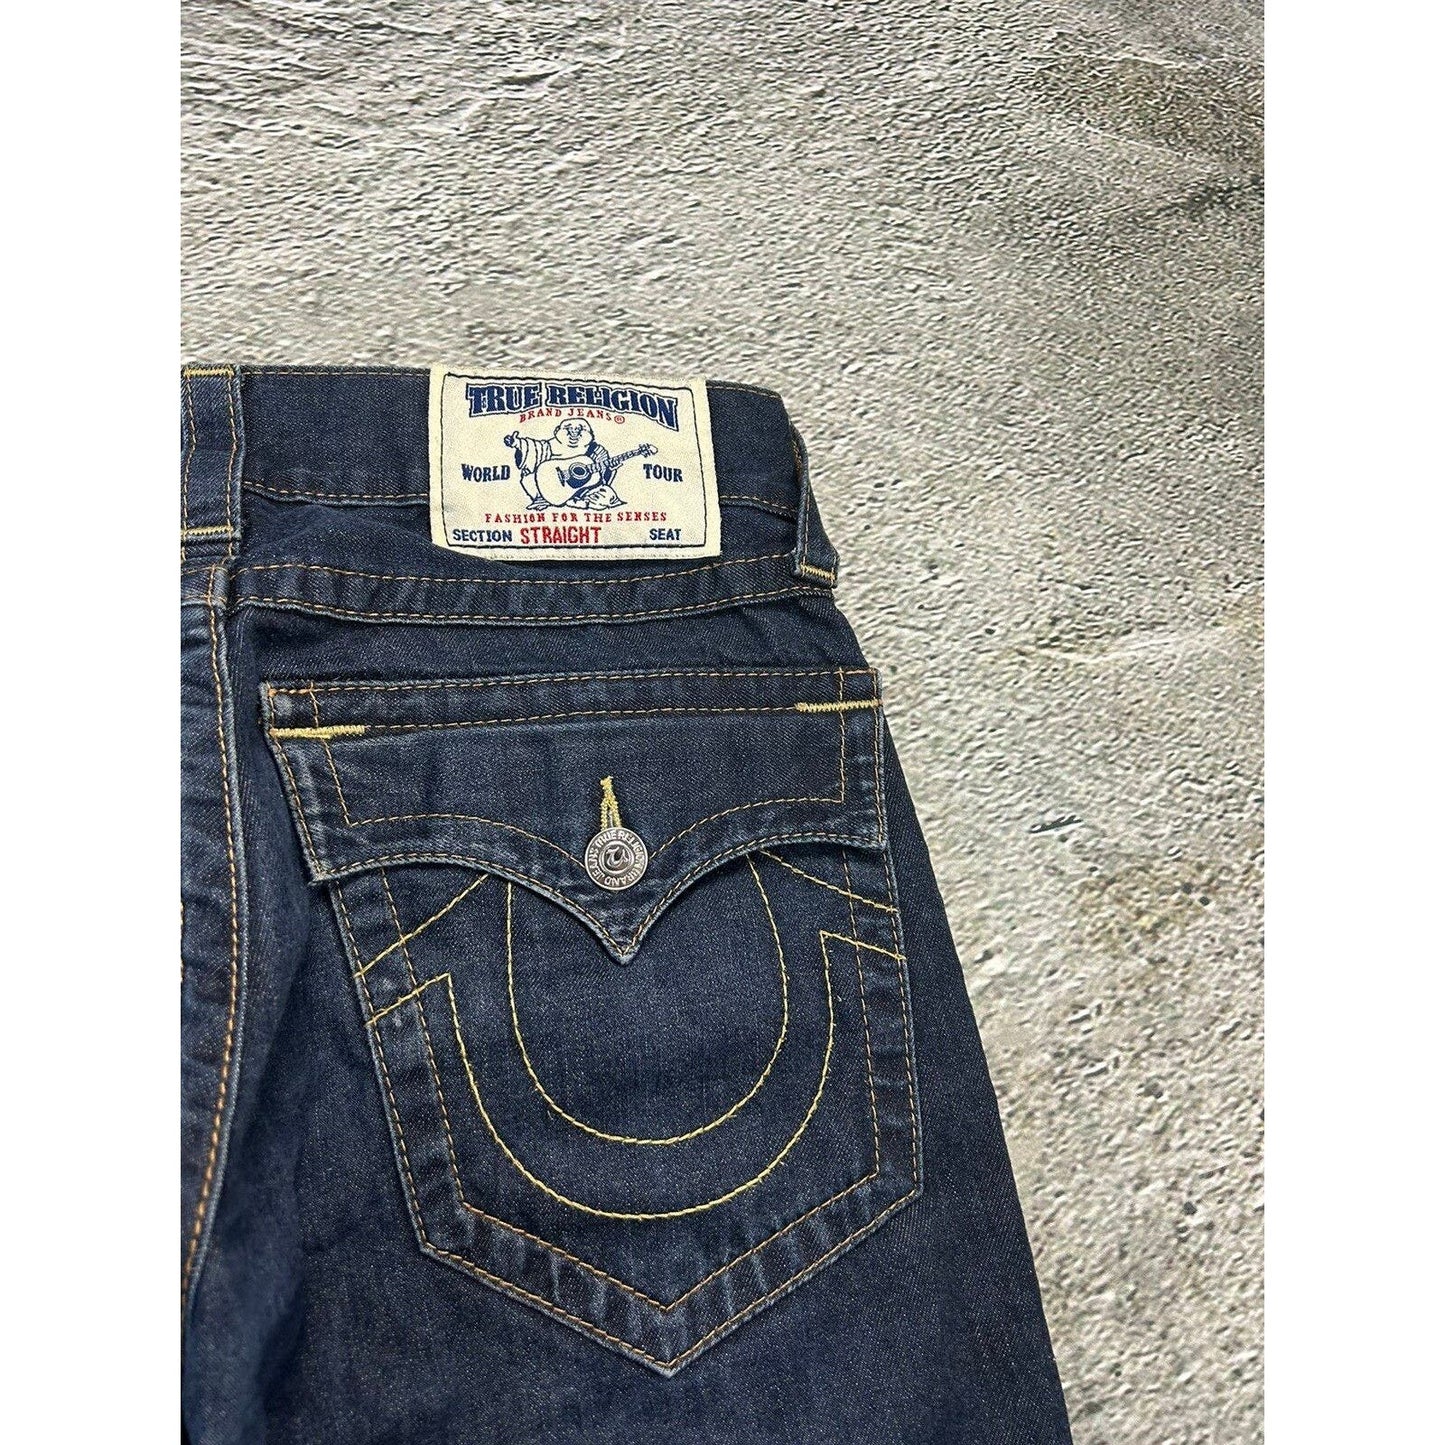 True Religion vintage jeans navy contrast stitching Y2K